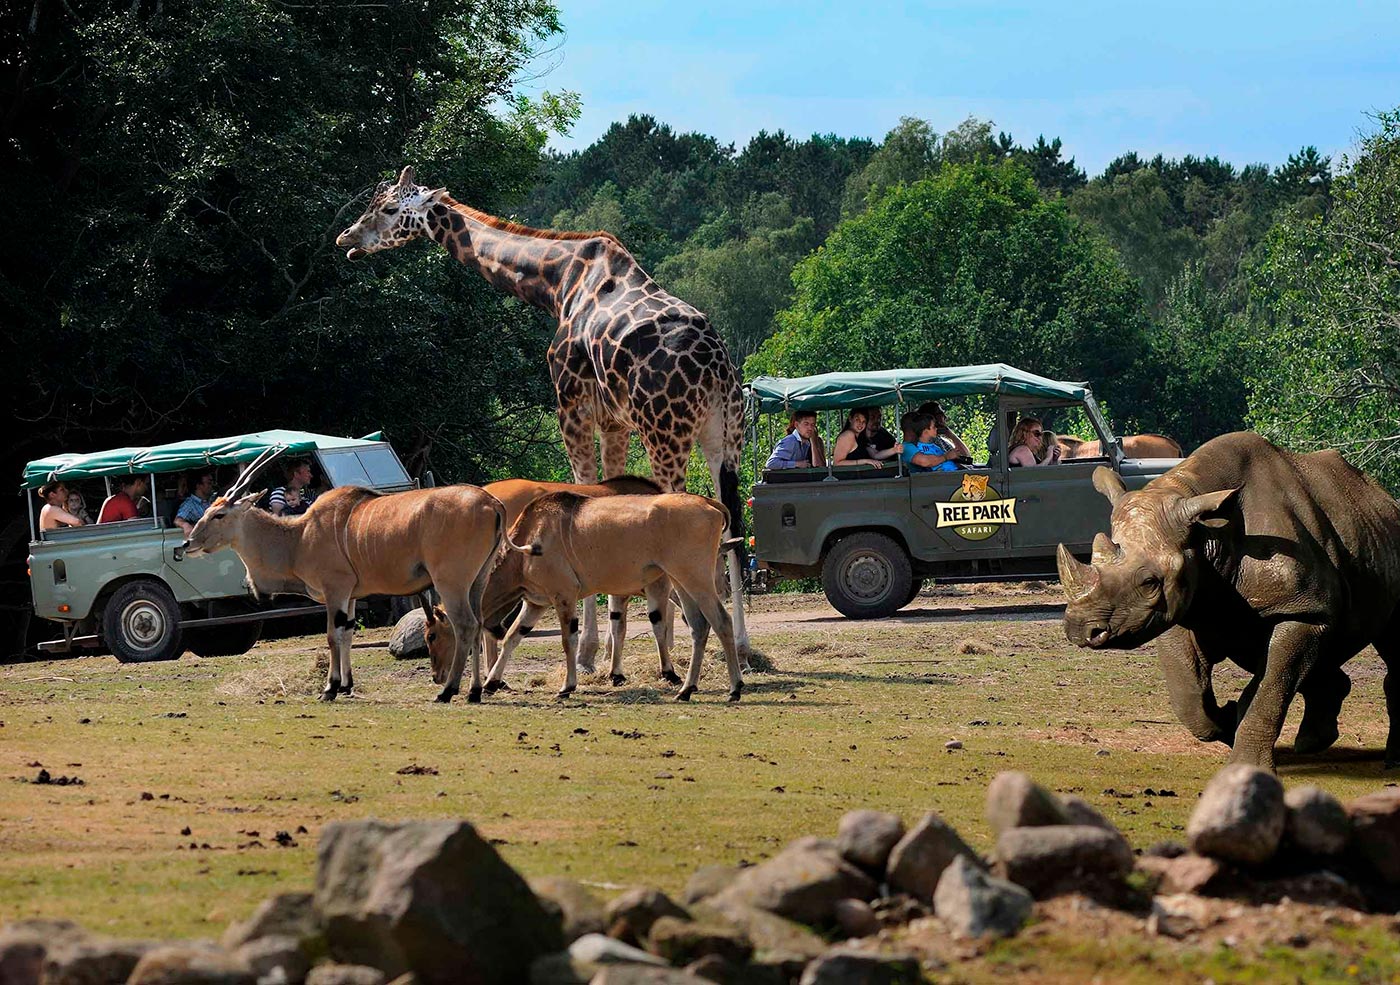 Kom helt tæt på dyrene i Ree Park Safari